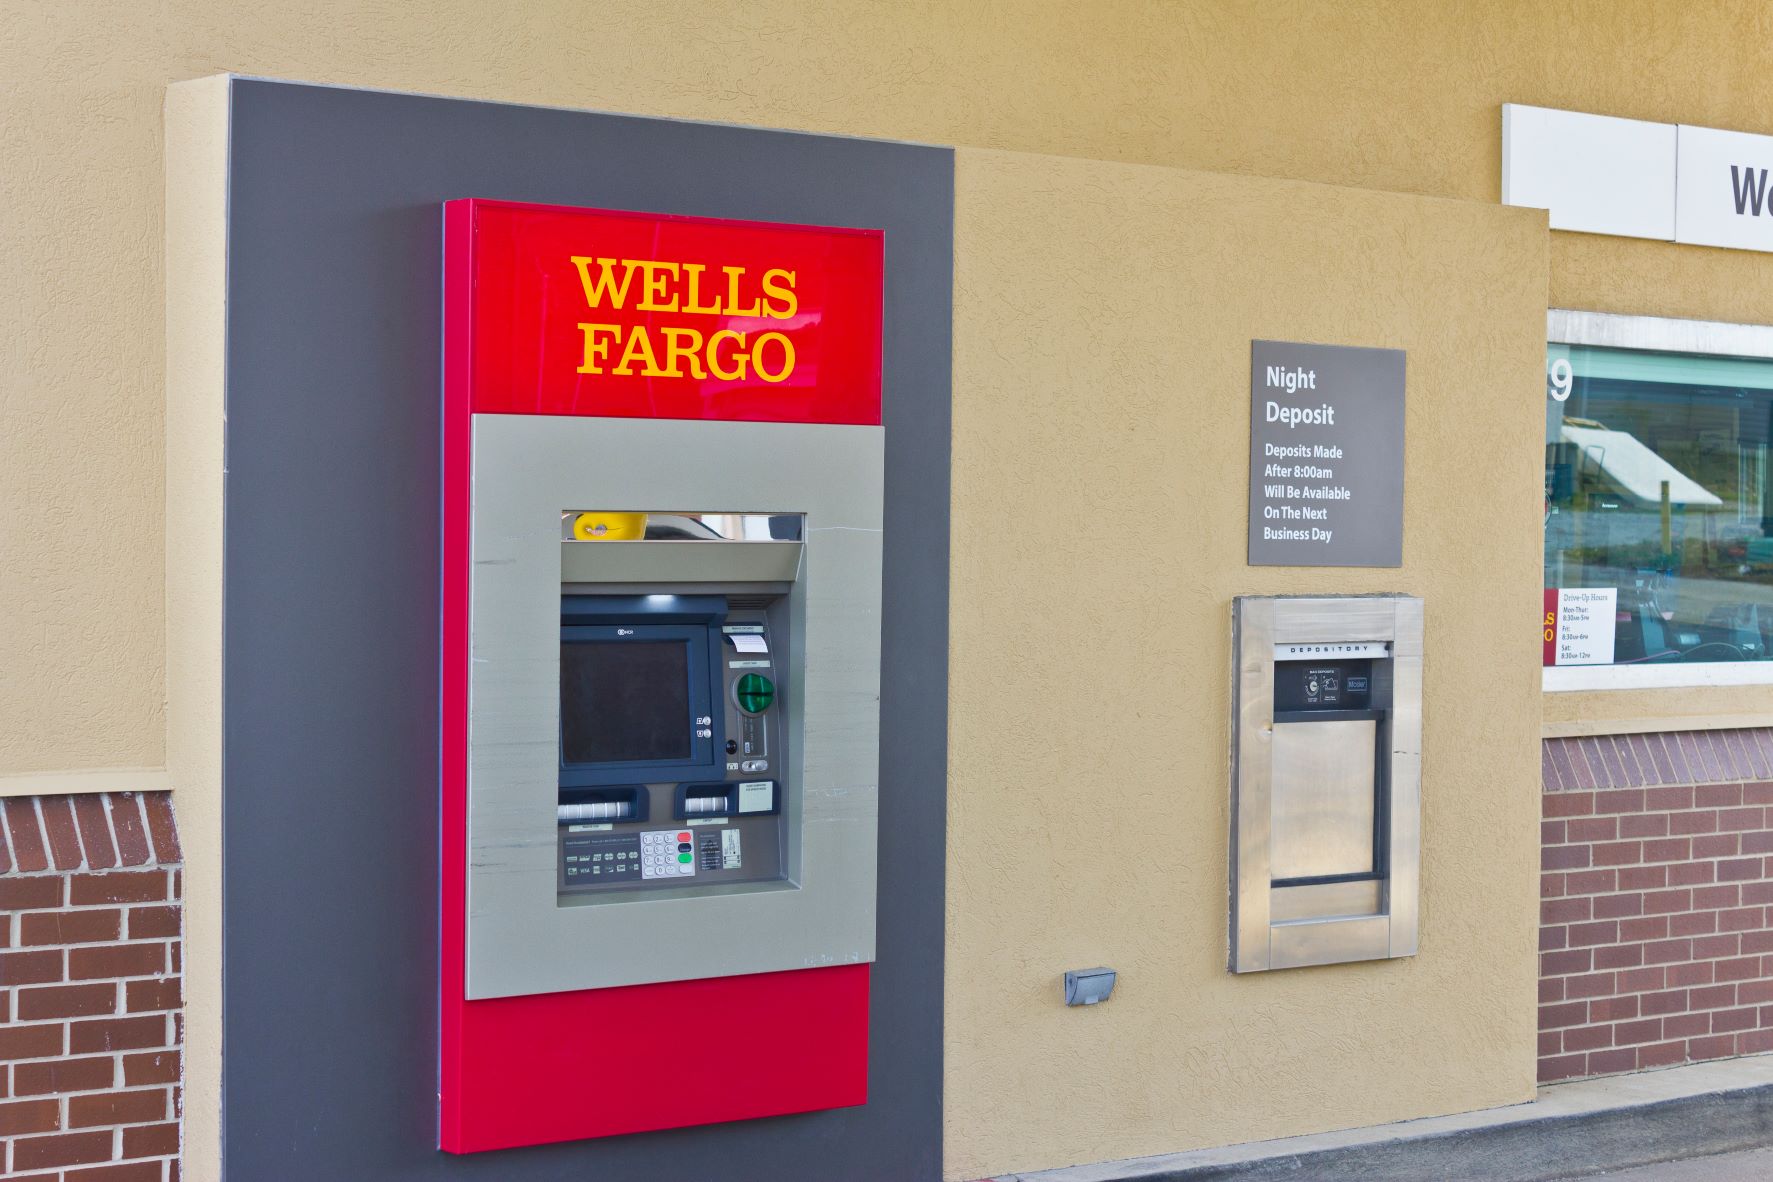 Stock of the day: Wells Fargo